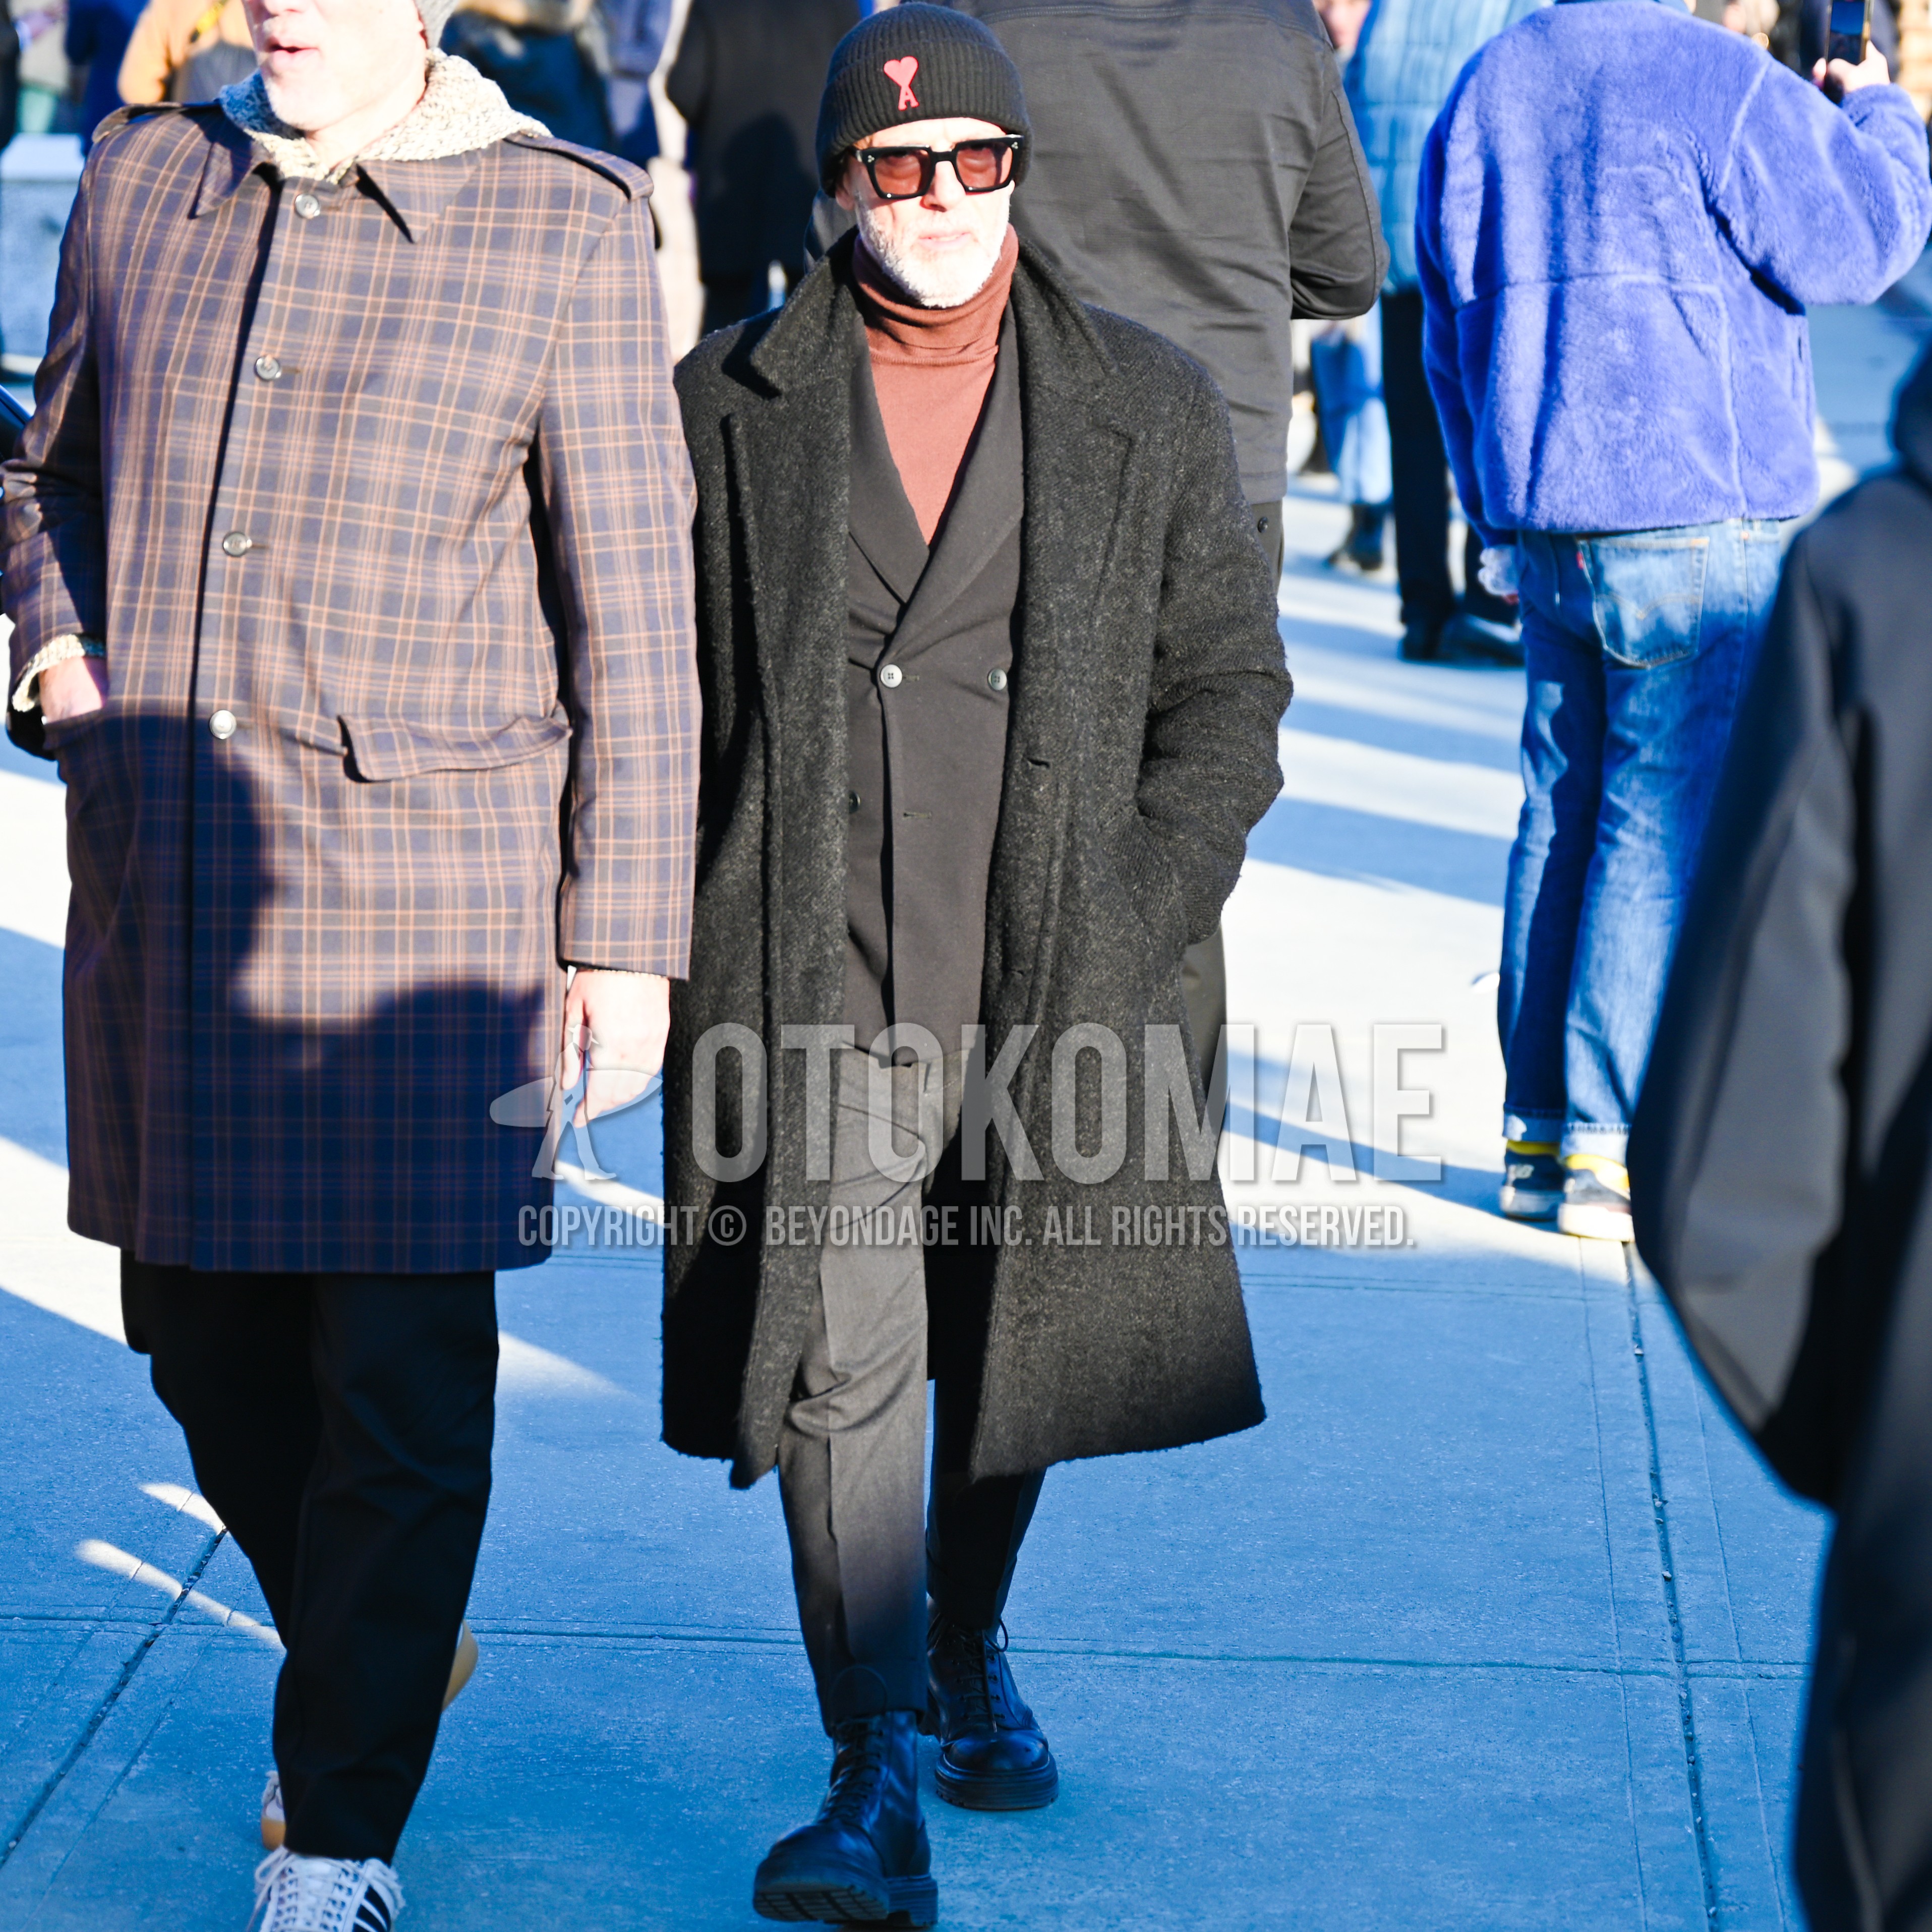 Men's autumn winter outfit with black one point knit cap, black plain sunglasses, black plain chester coat, brown plain turtleneck knit, black plain tailored jacket, dark gray plain slacks, black work boots.